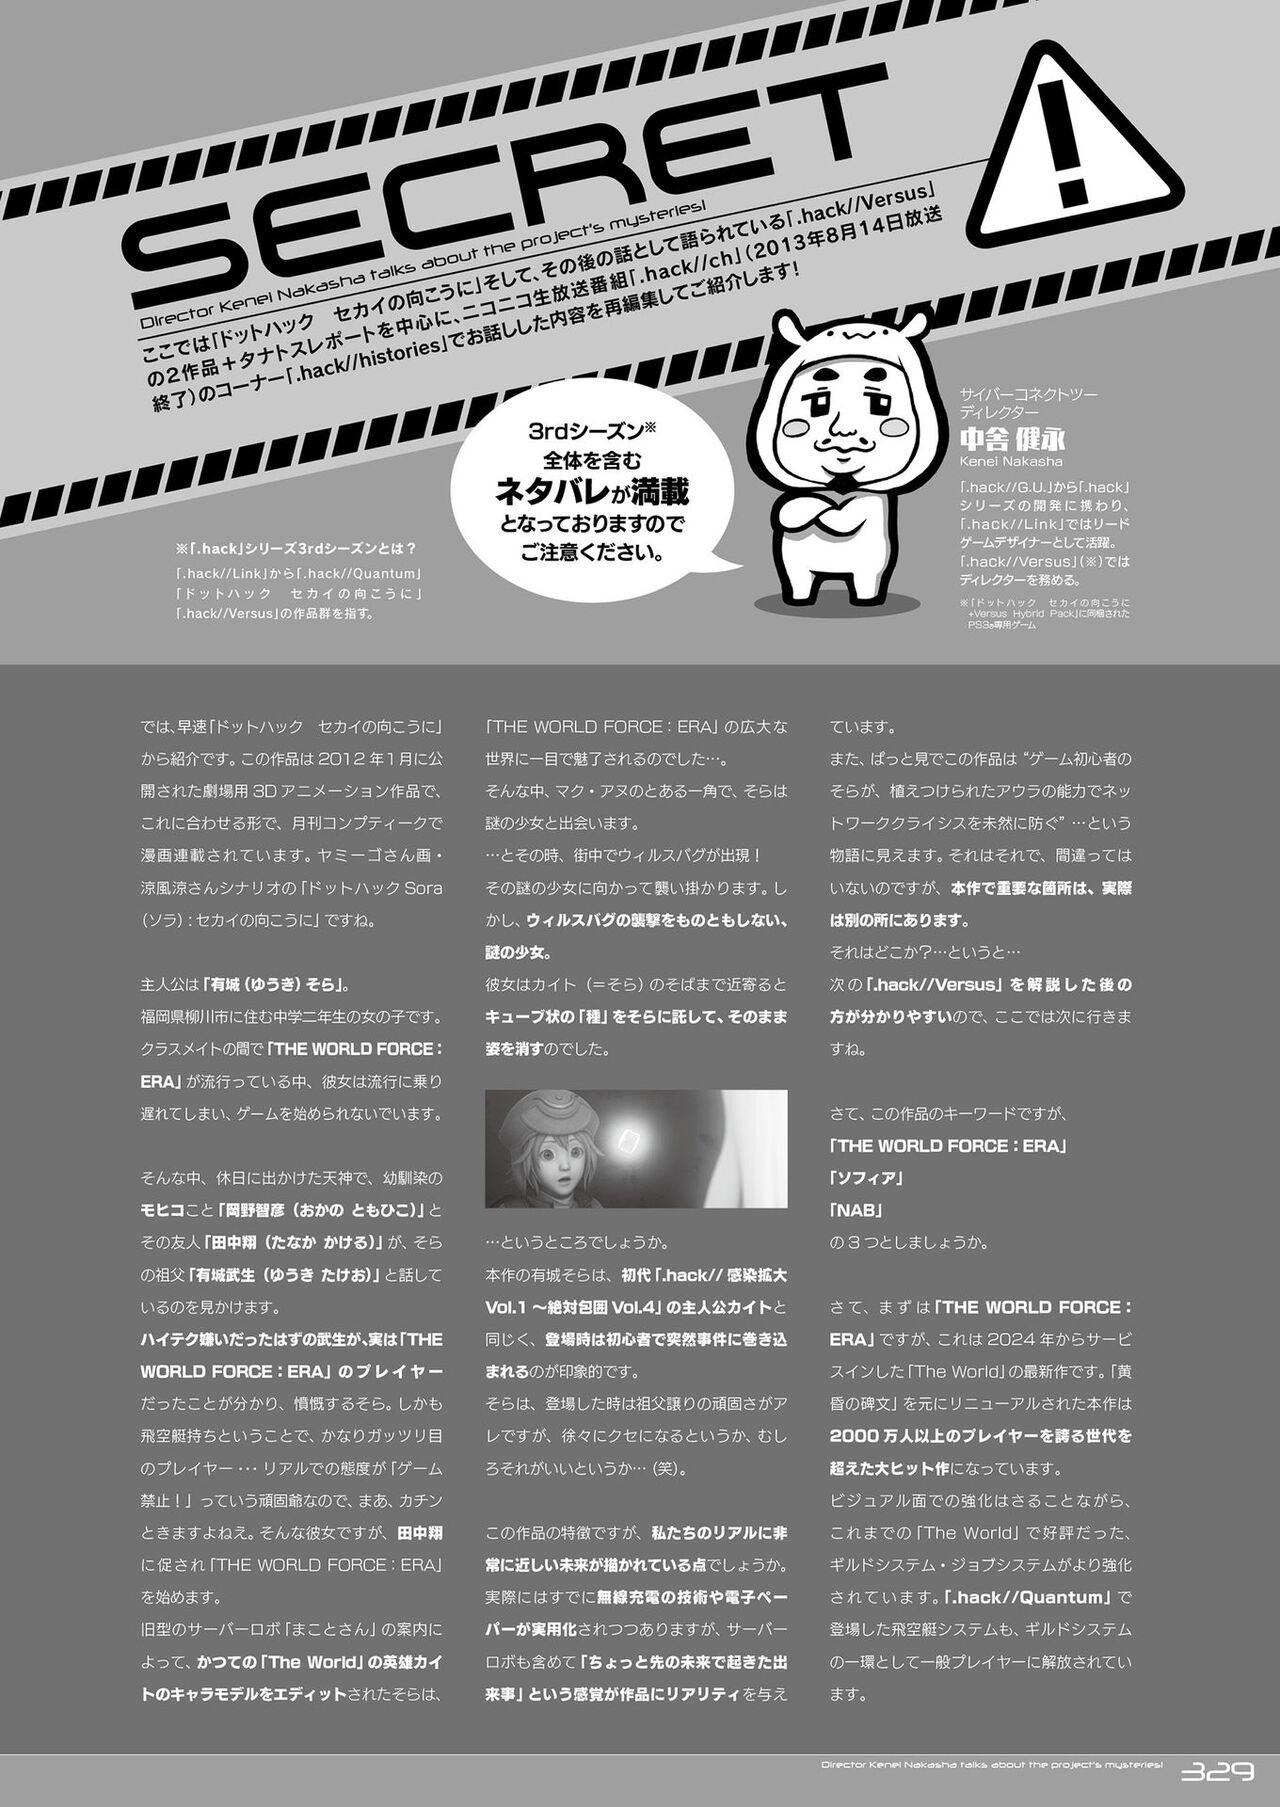 Dot Hack Sekai-no Muko ni  +Versus Complete Set  Documentation .hack //Archives _ 05 331